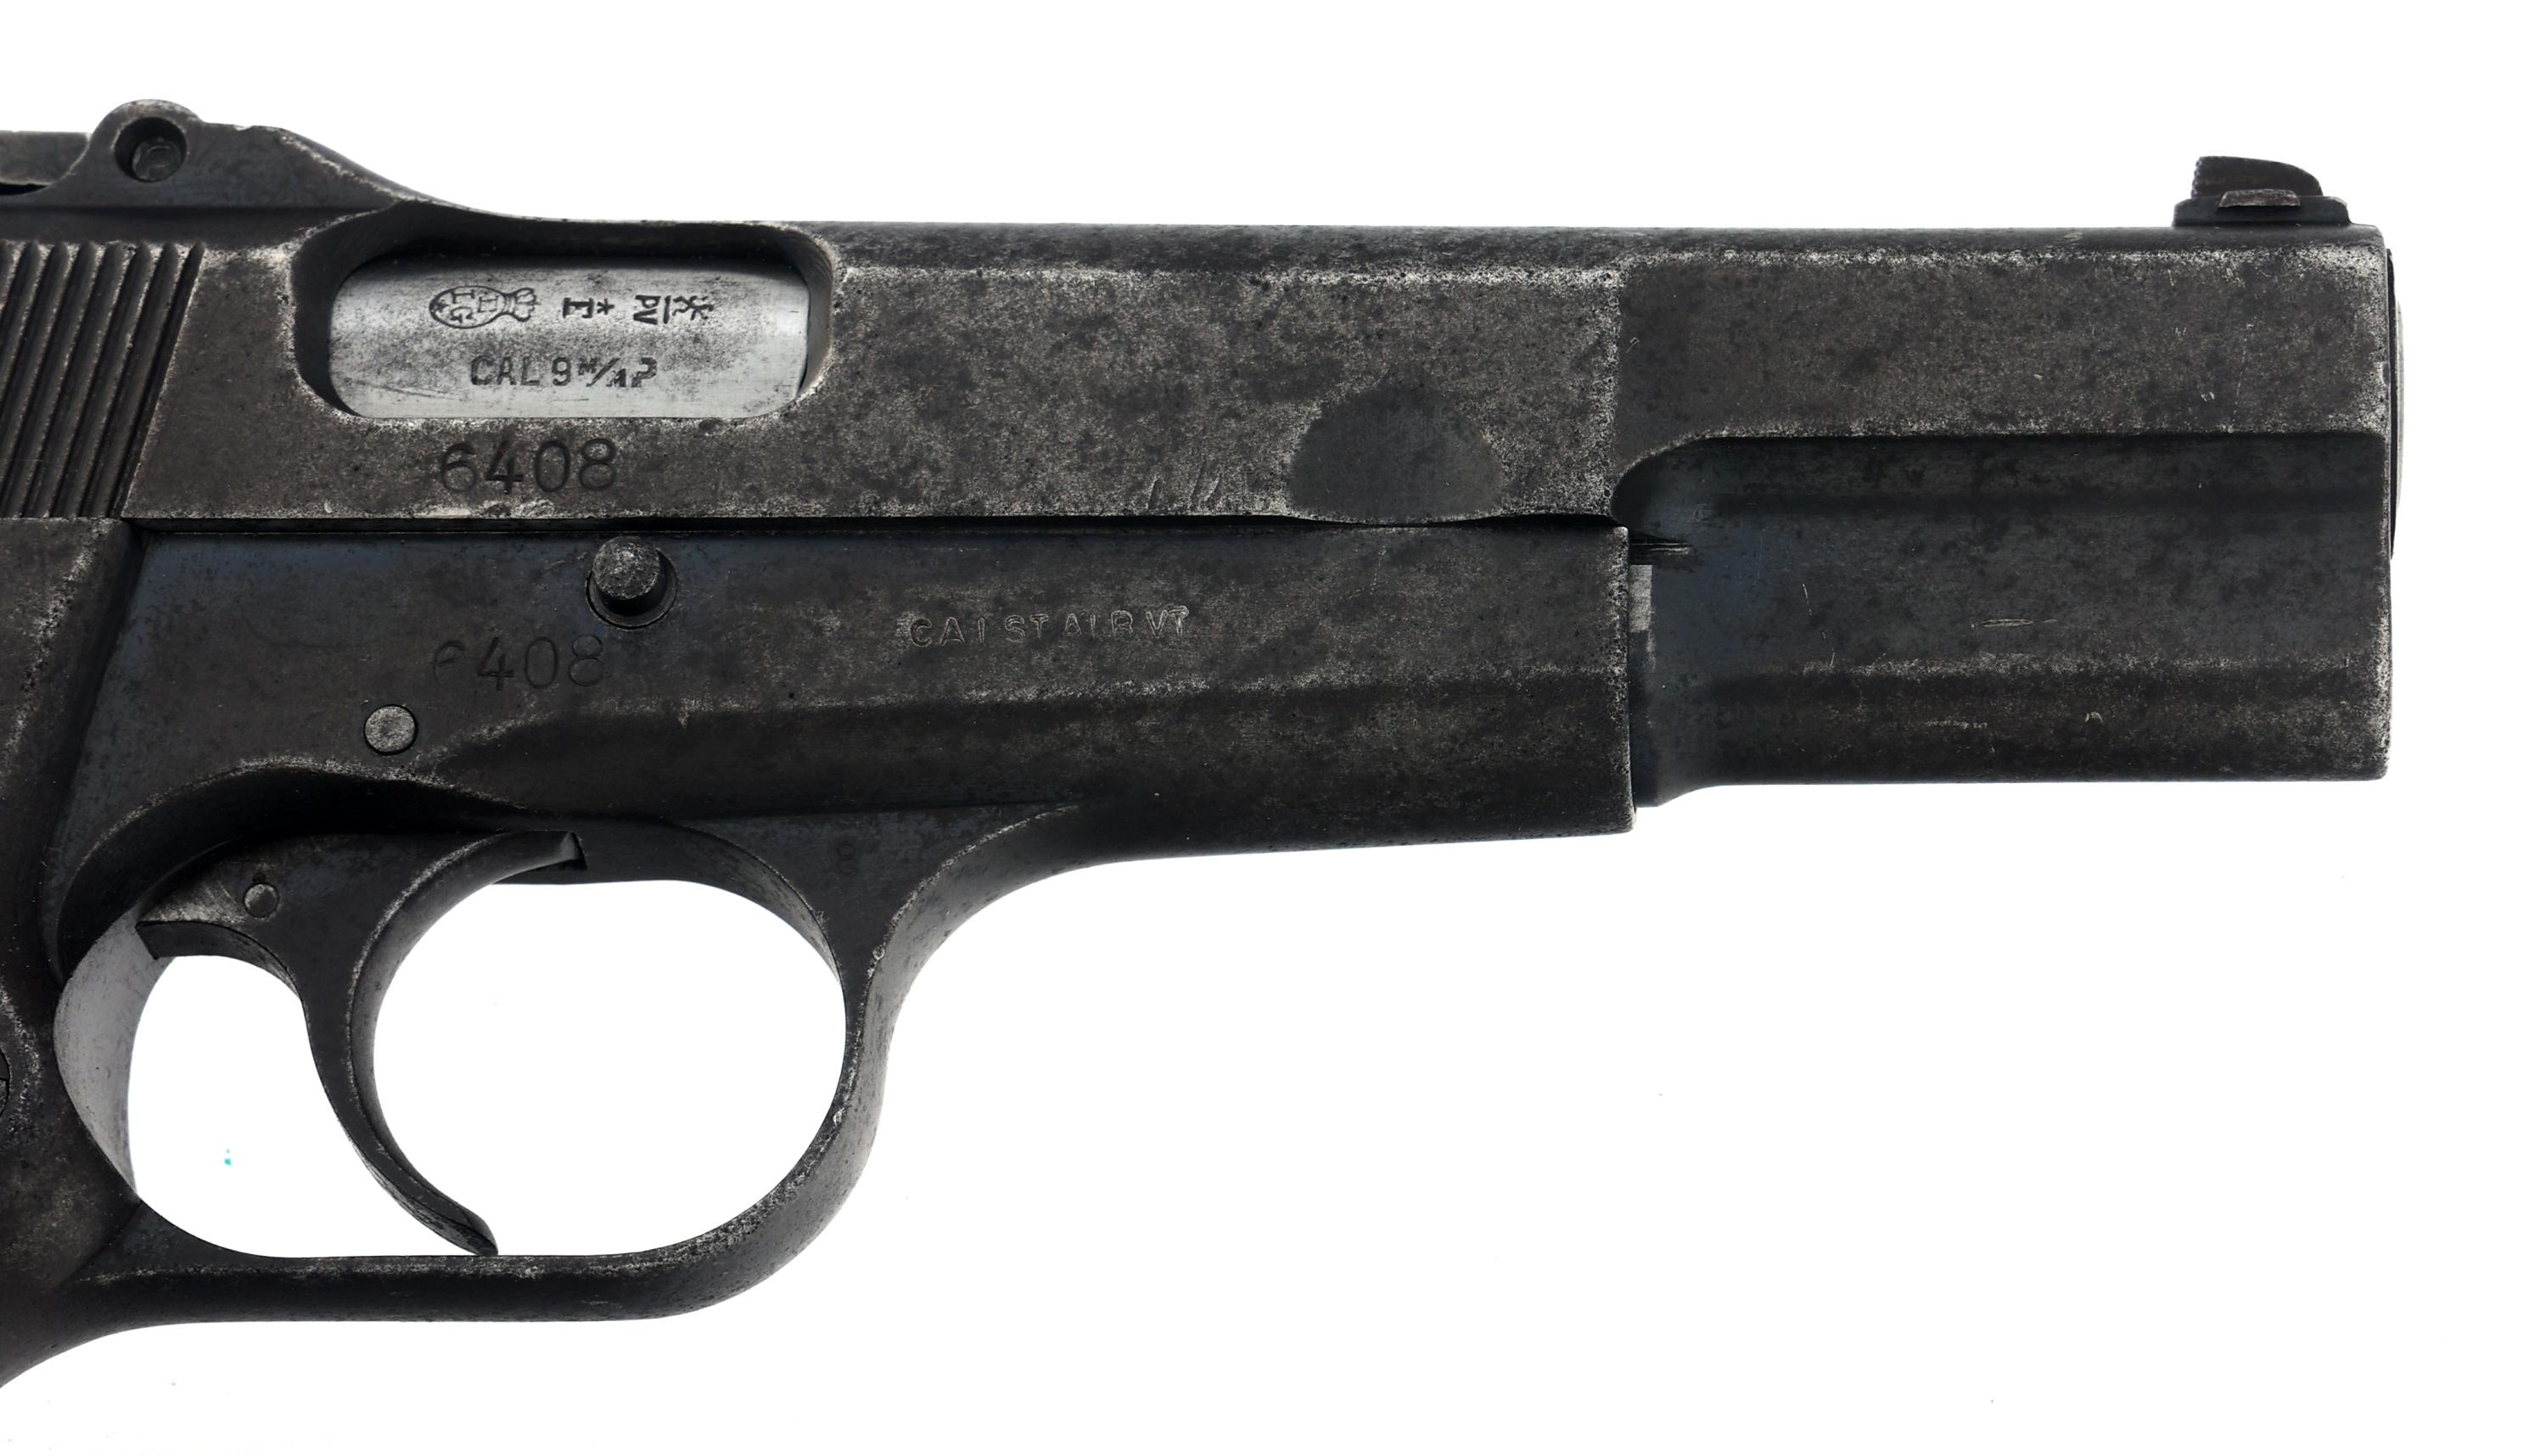 FN BROWNING MODEL HI POWER 9mm CALIBER PISTOL